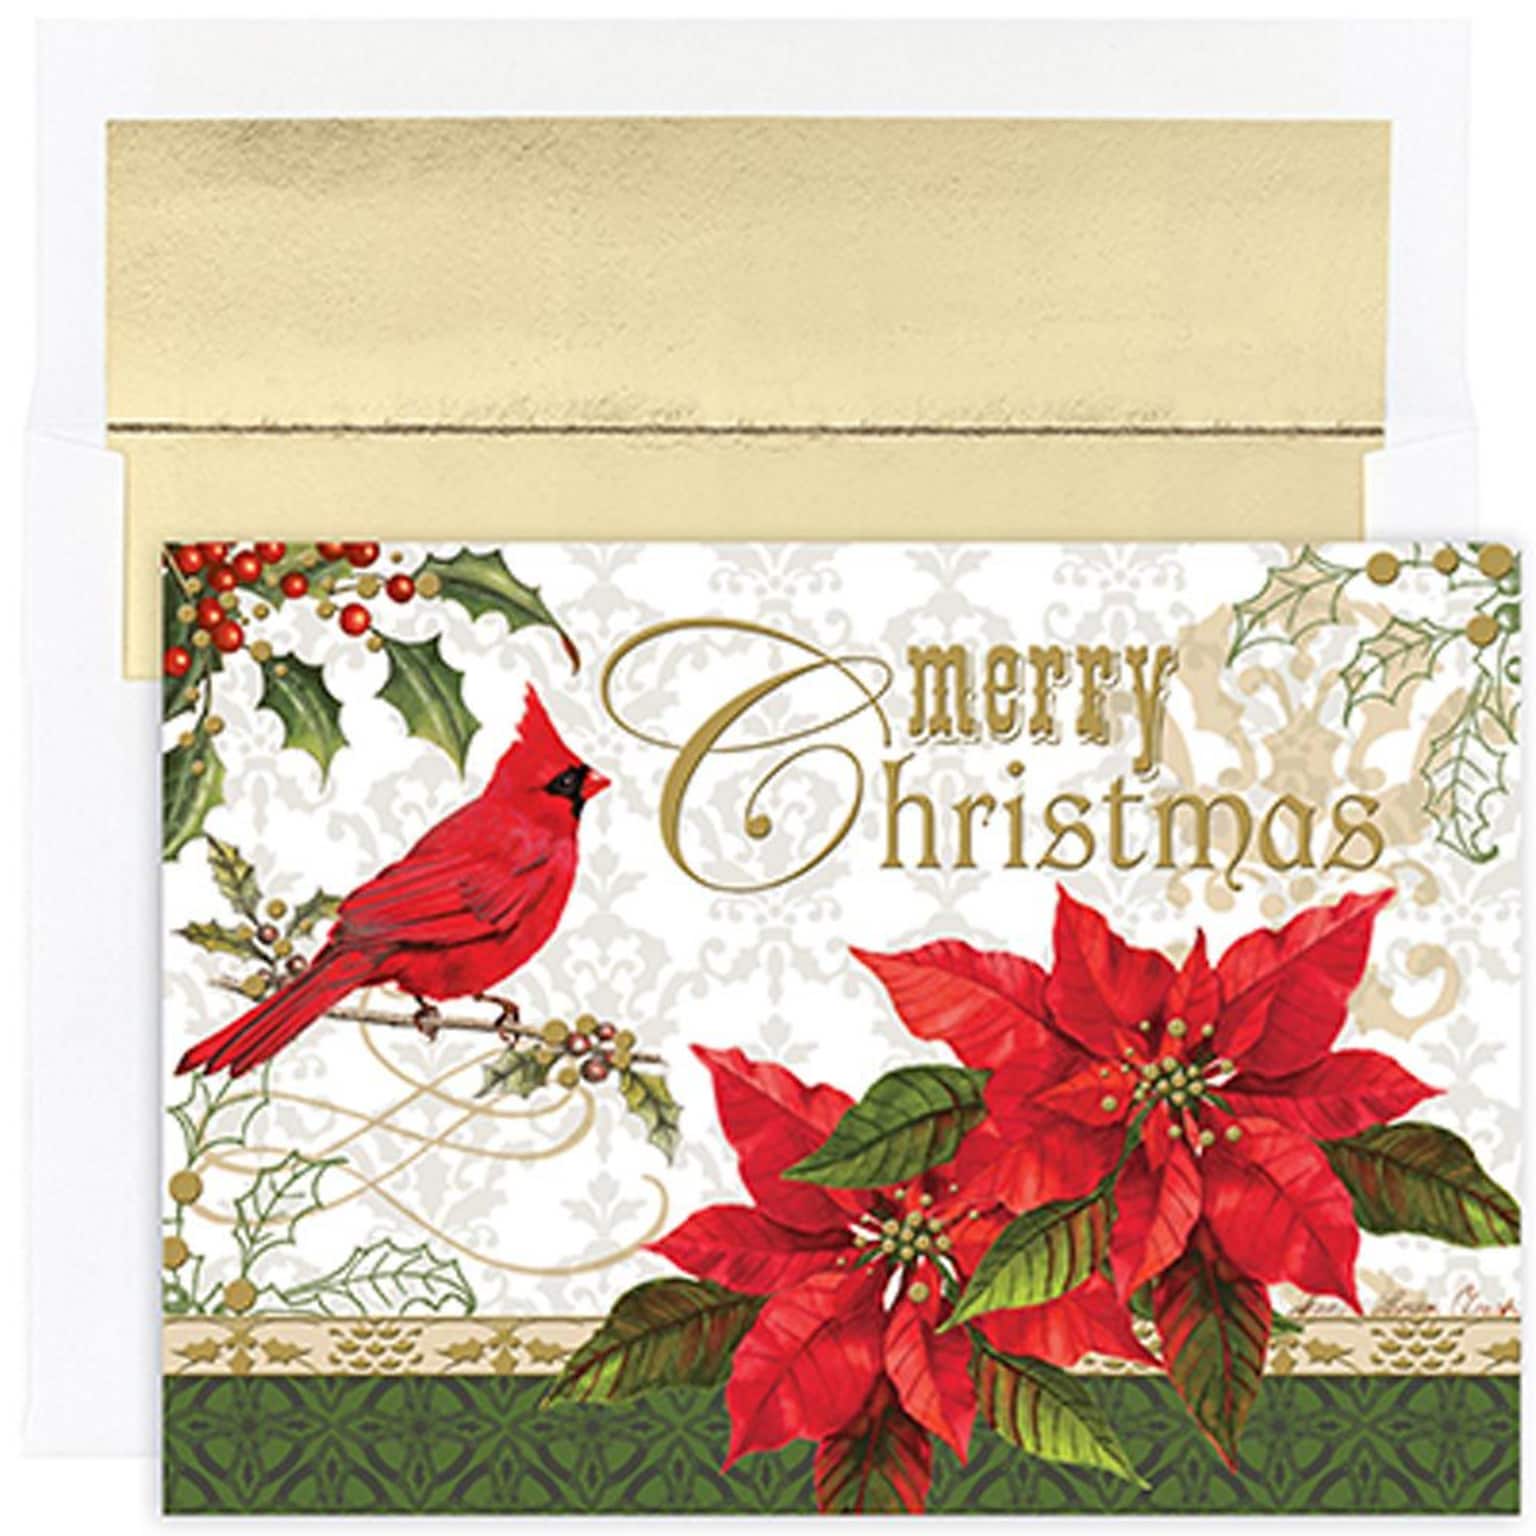 JAM Paper® Christmas Holiday Cards Set, Peace and Joy Merry Christmas Cardinal, 16/pack (526859900)